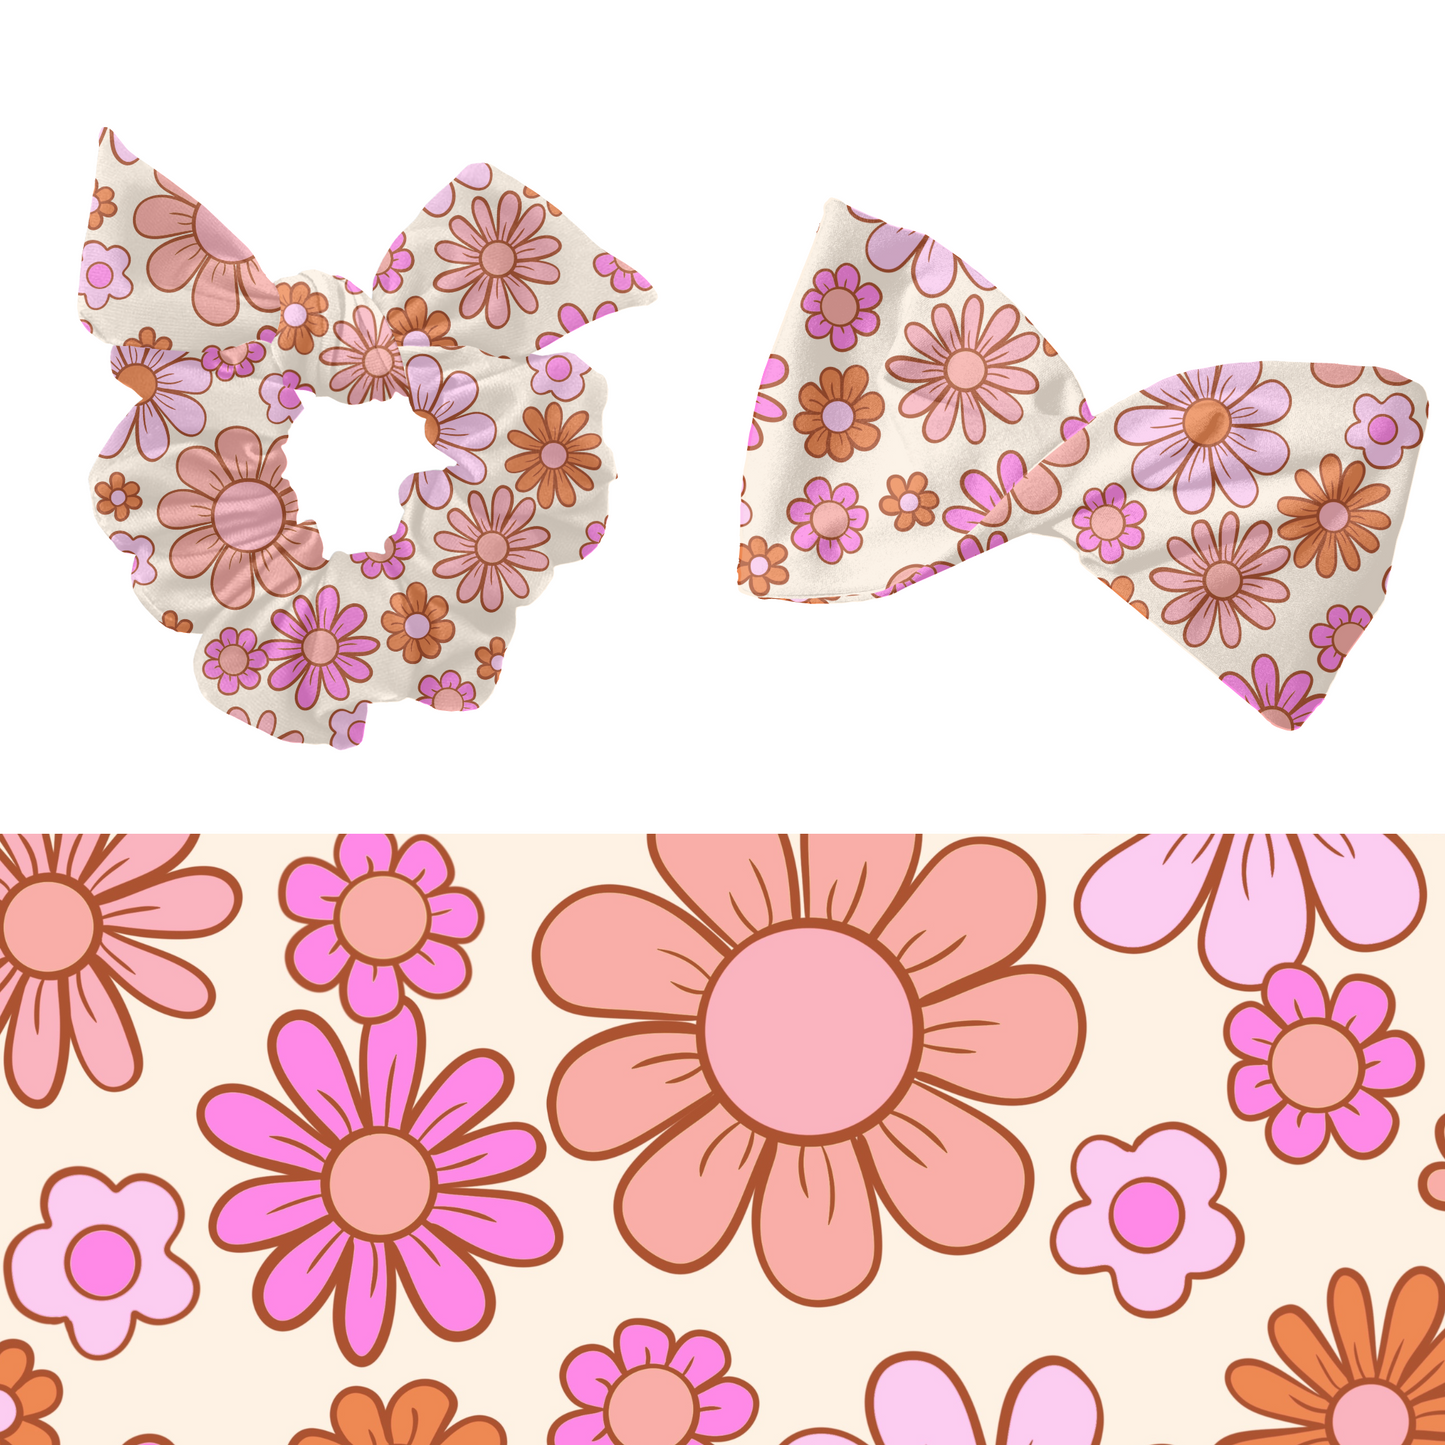 Retro daisy floral seamless pattern design